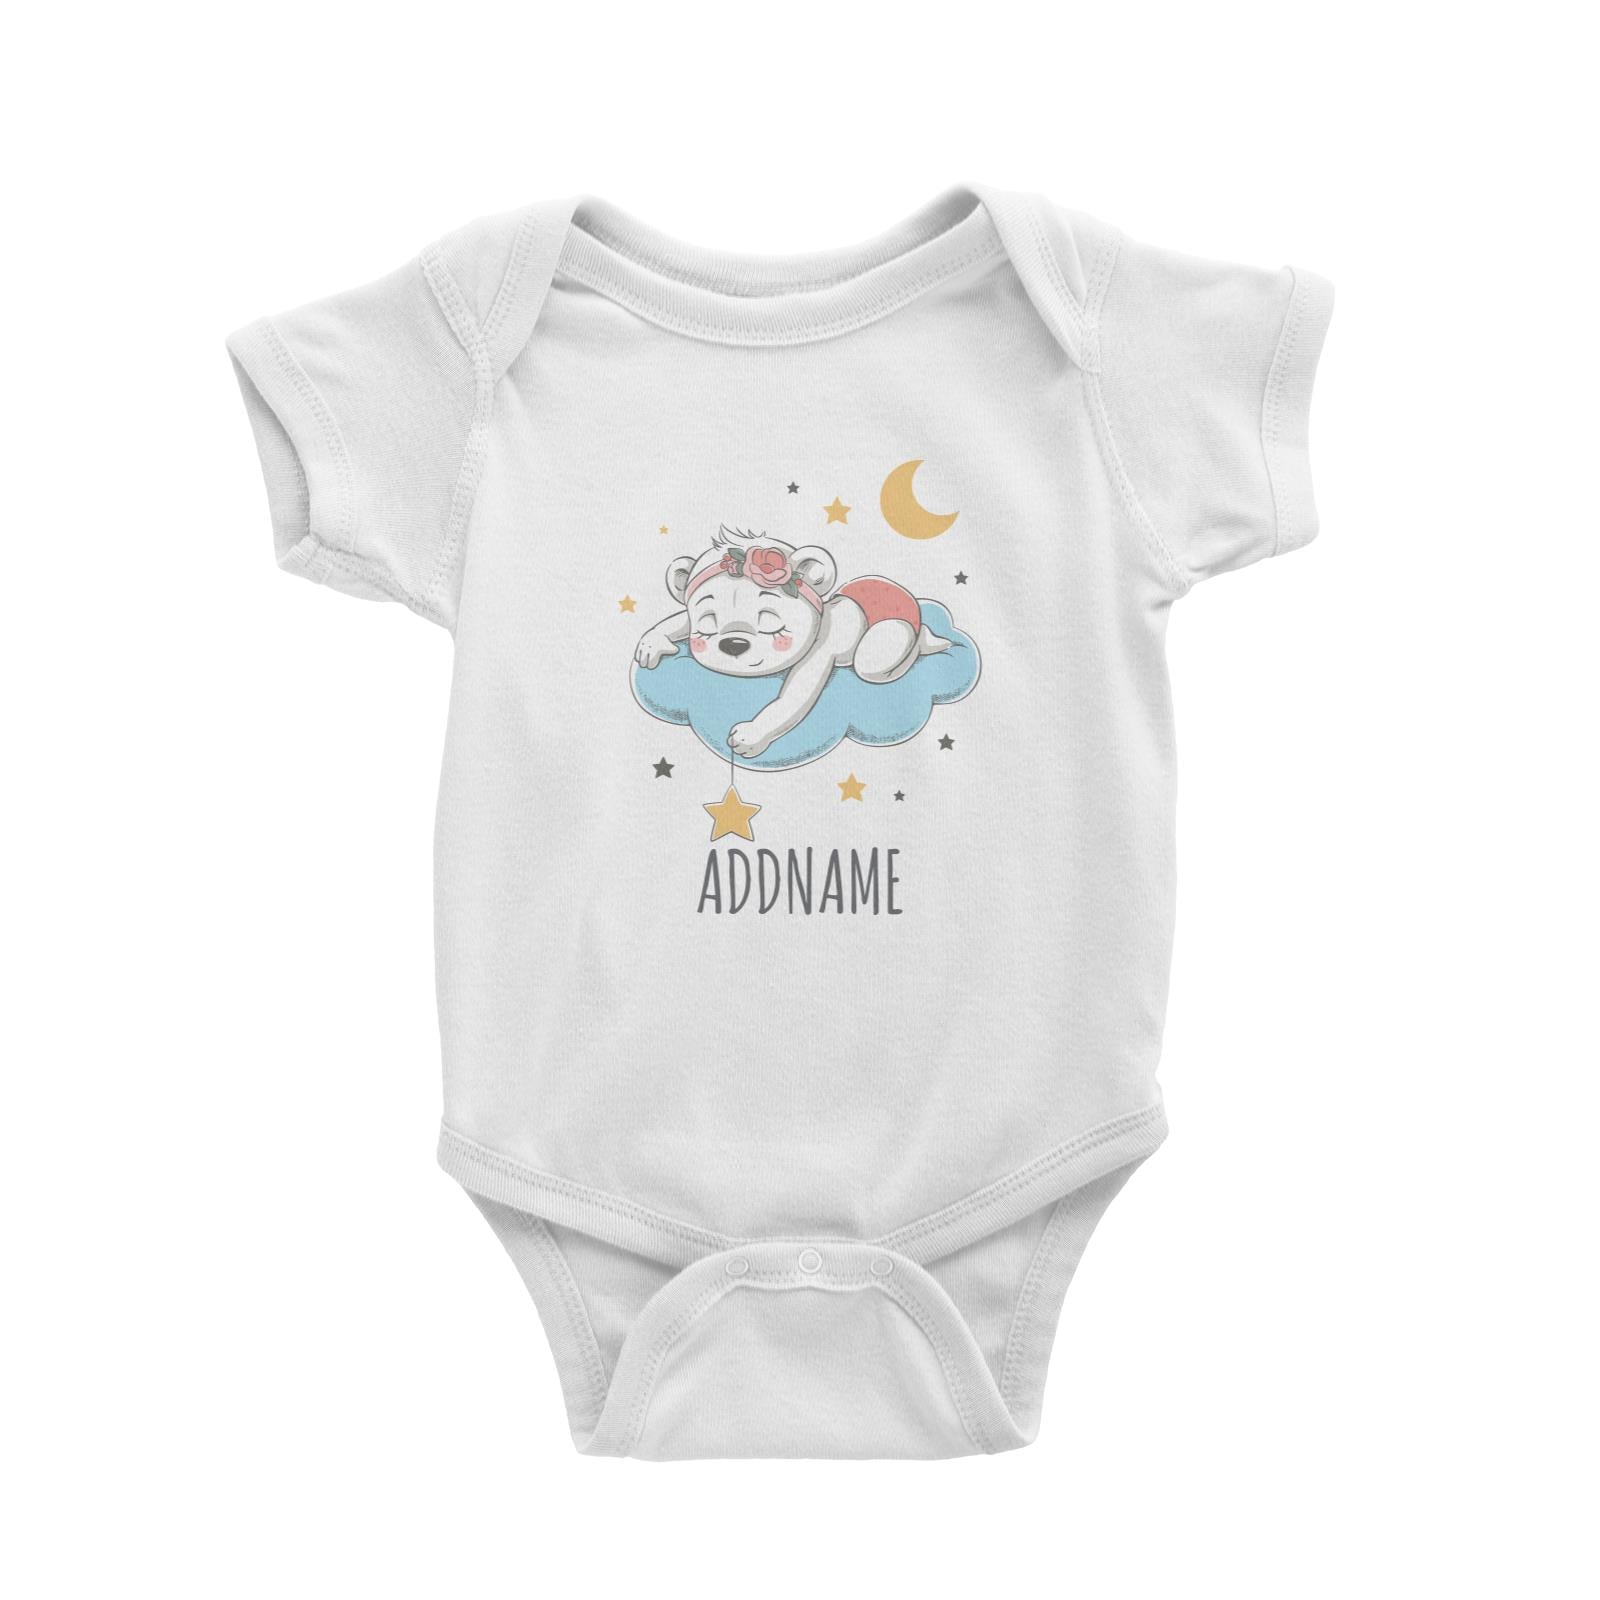 Sleeping Girl Bear on Cloud White Baby Romper Personalizable Designs Cute Sweet Animal For Girls Newborn HG